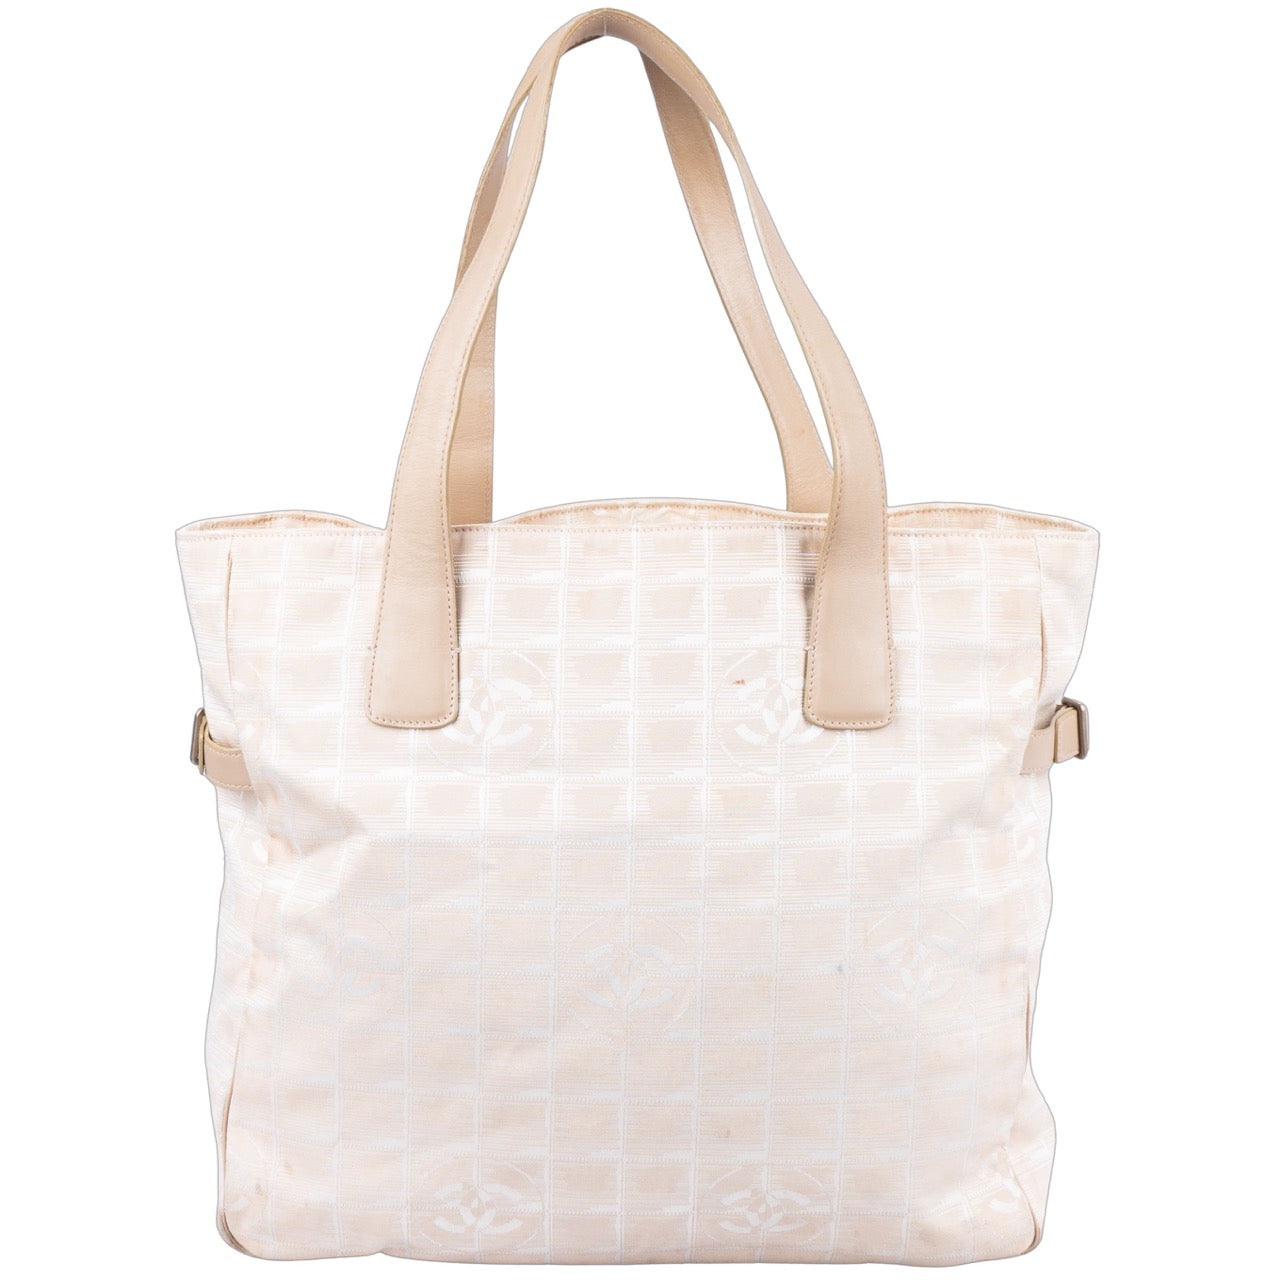 Chanel Travel Line Beige Shopper Bag